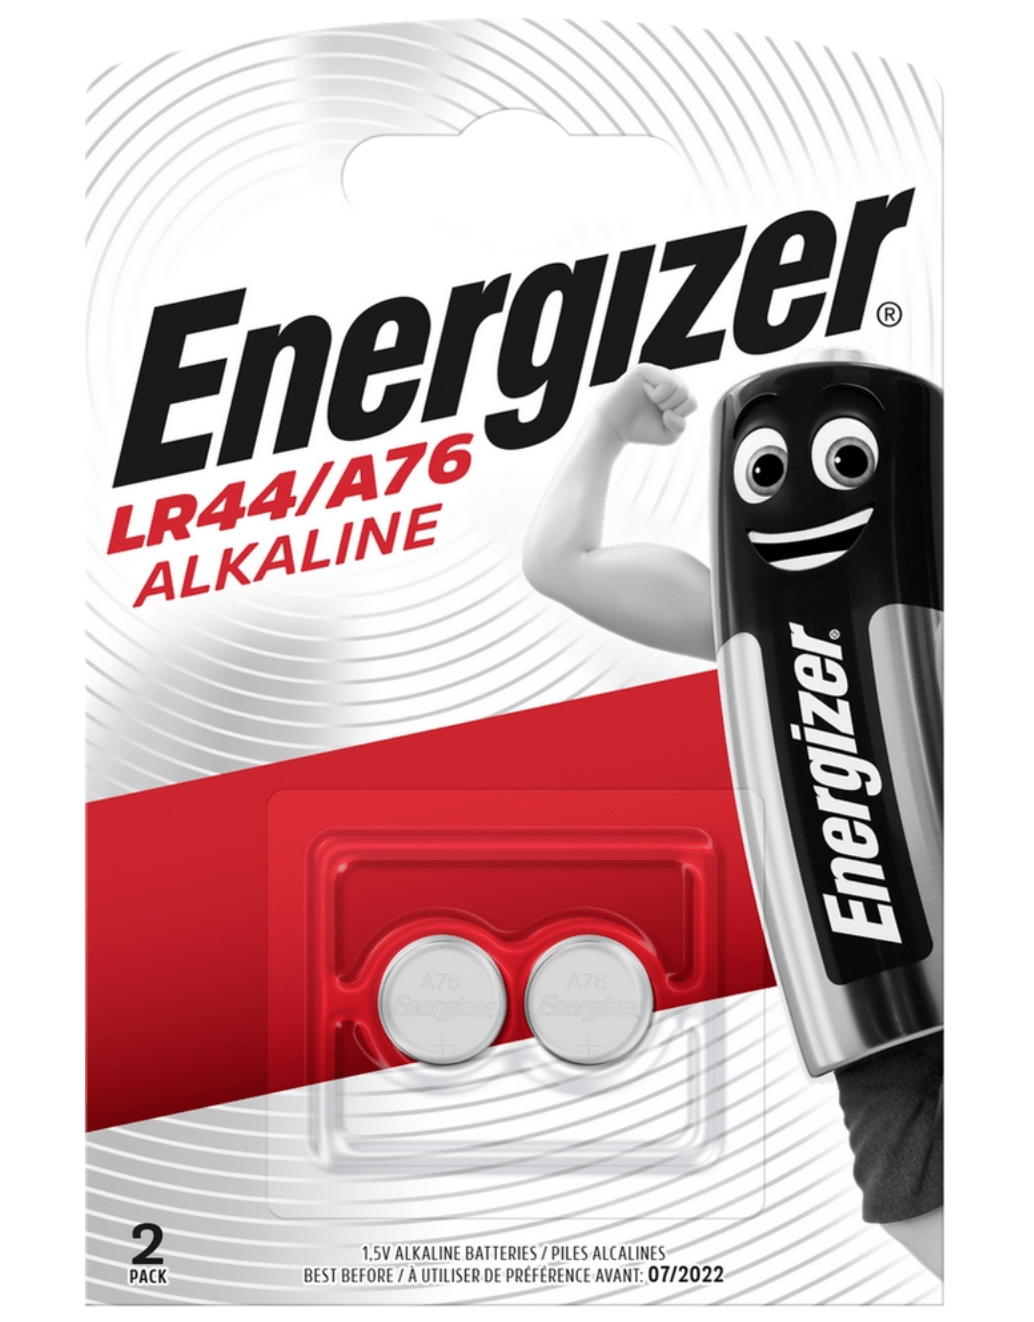 Energizer Battery Energizer LR44/A76 batteries